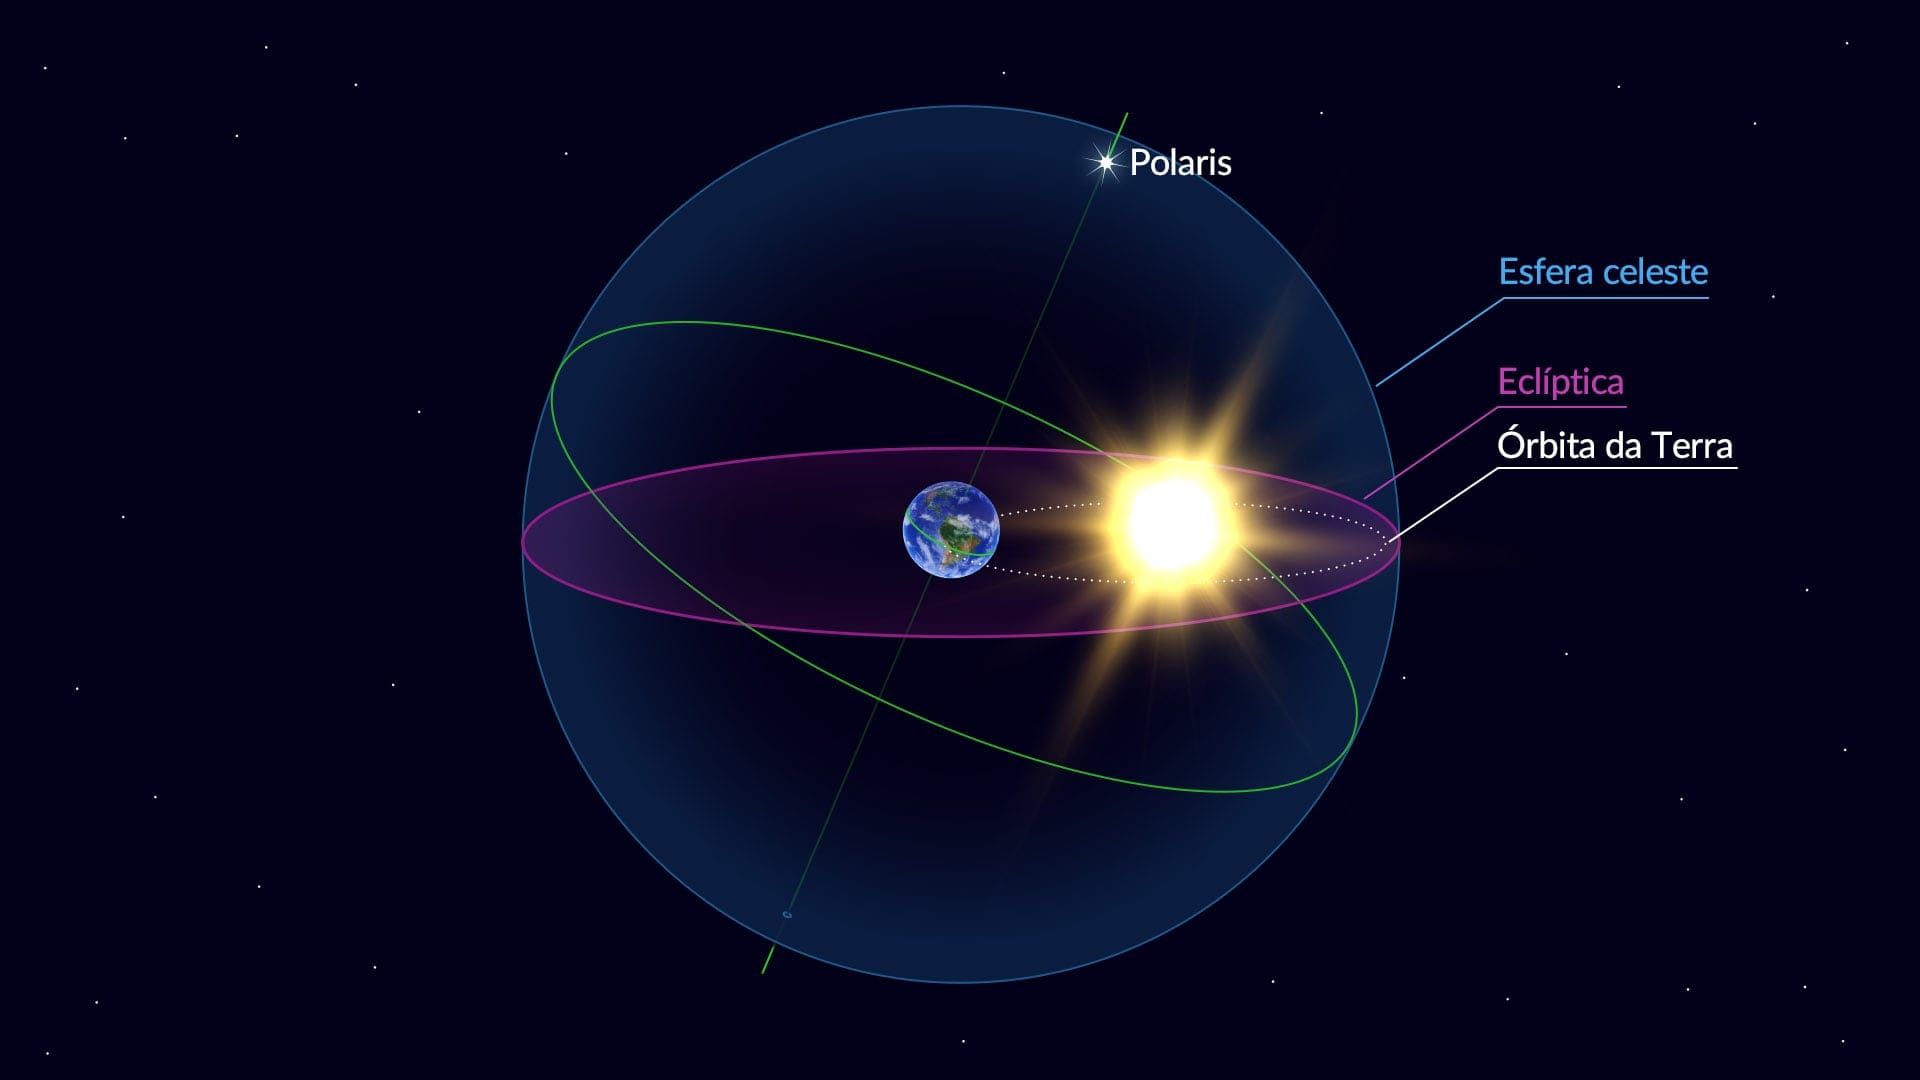 O plano da eclíptica - o plano orbital da Terra